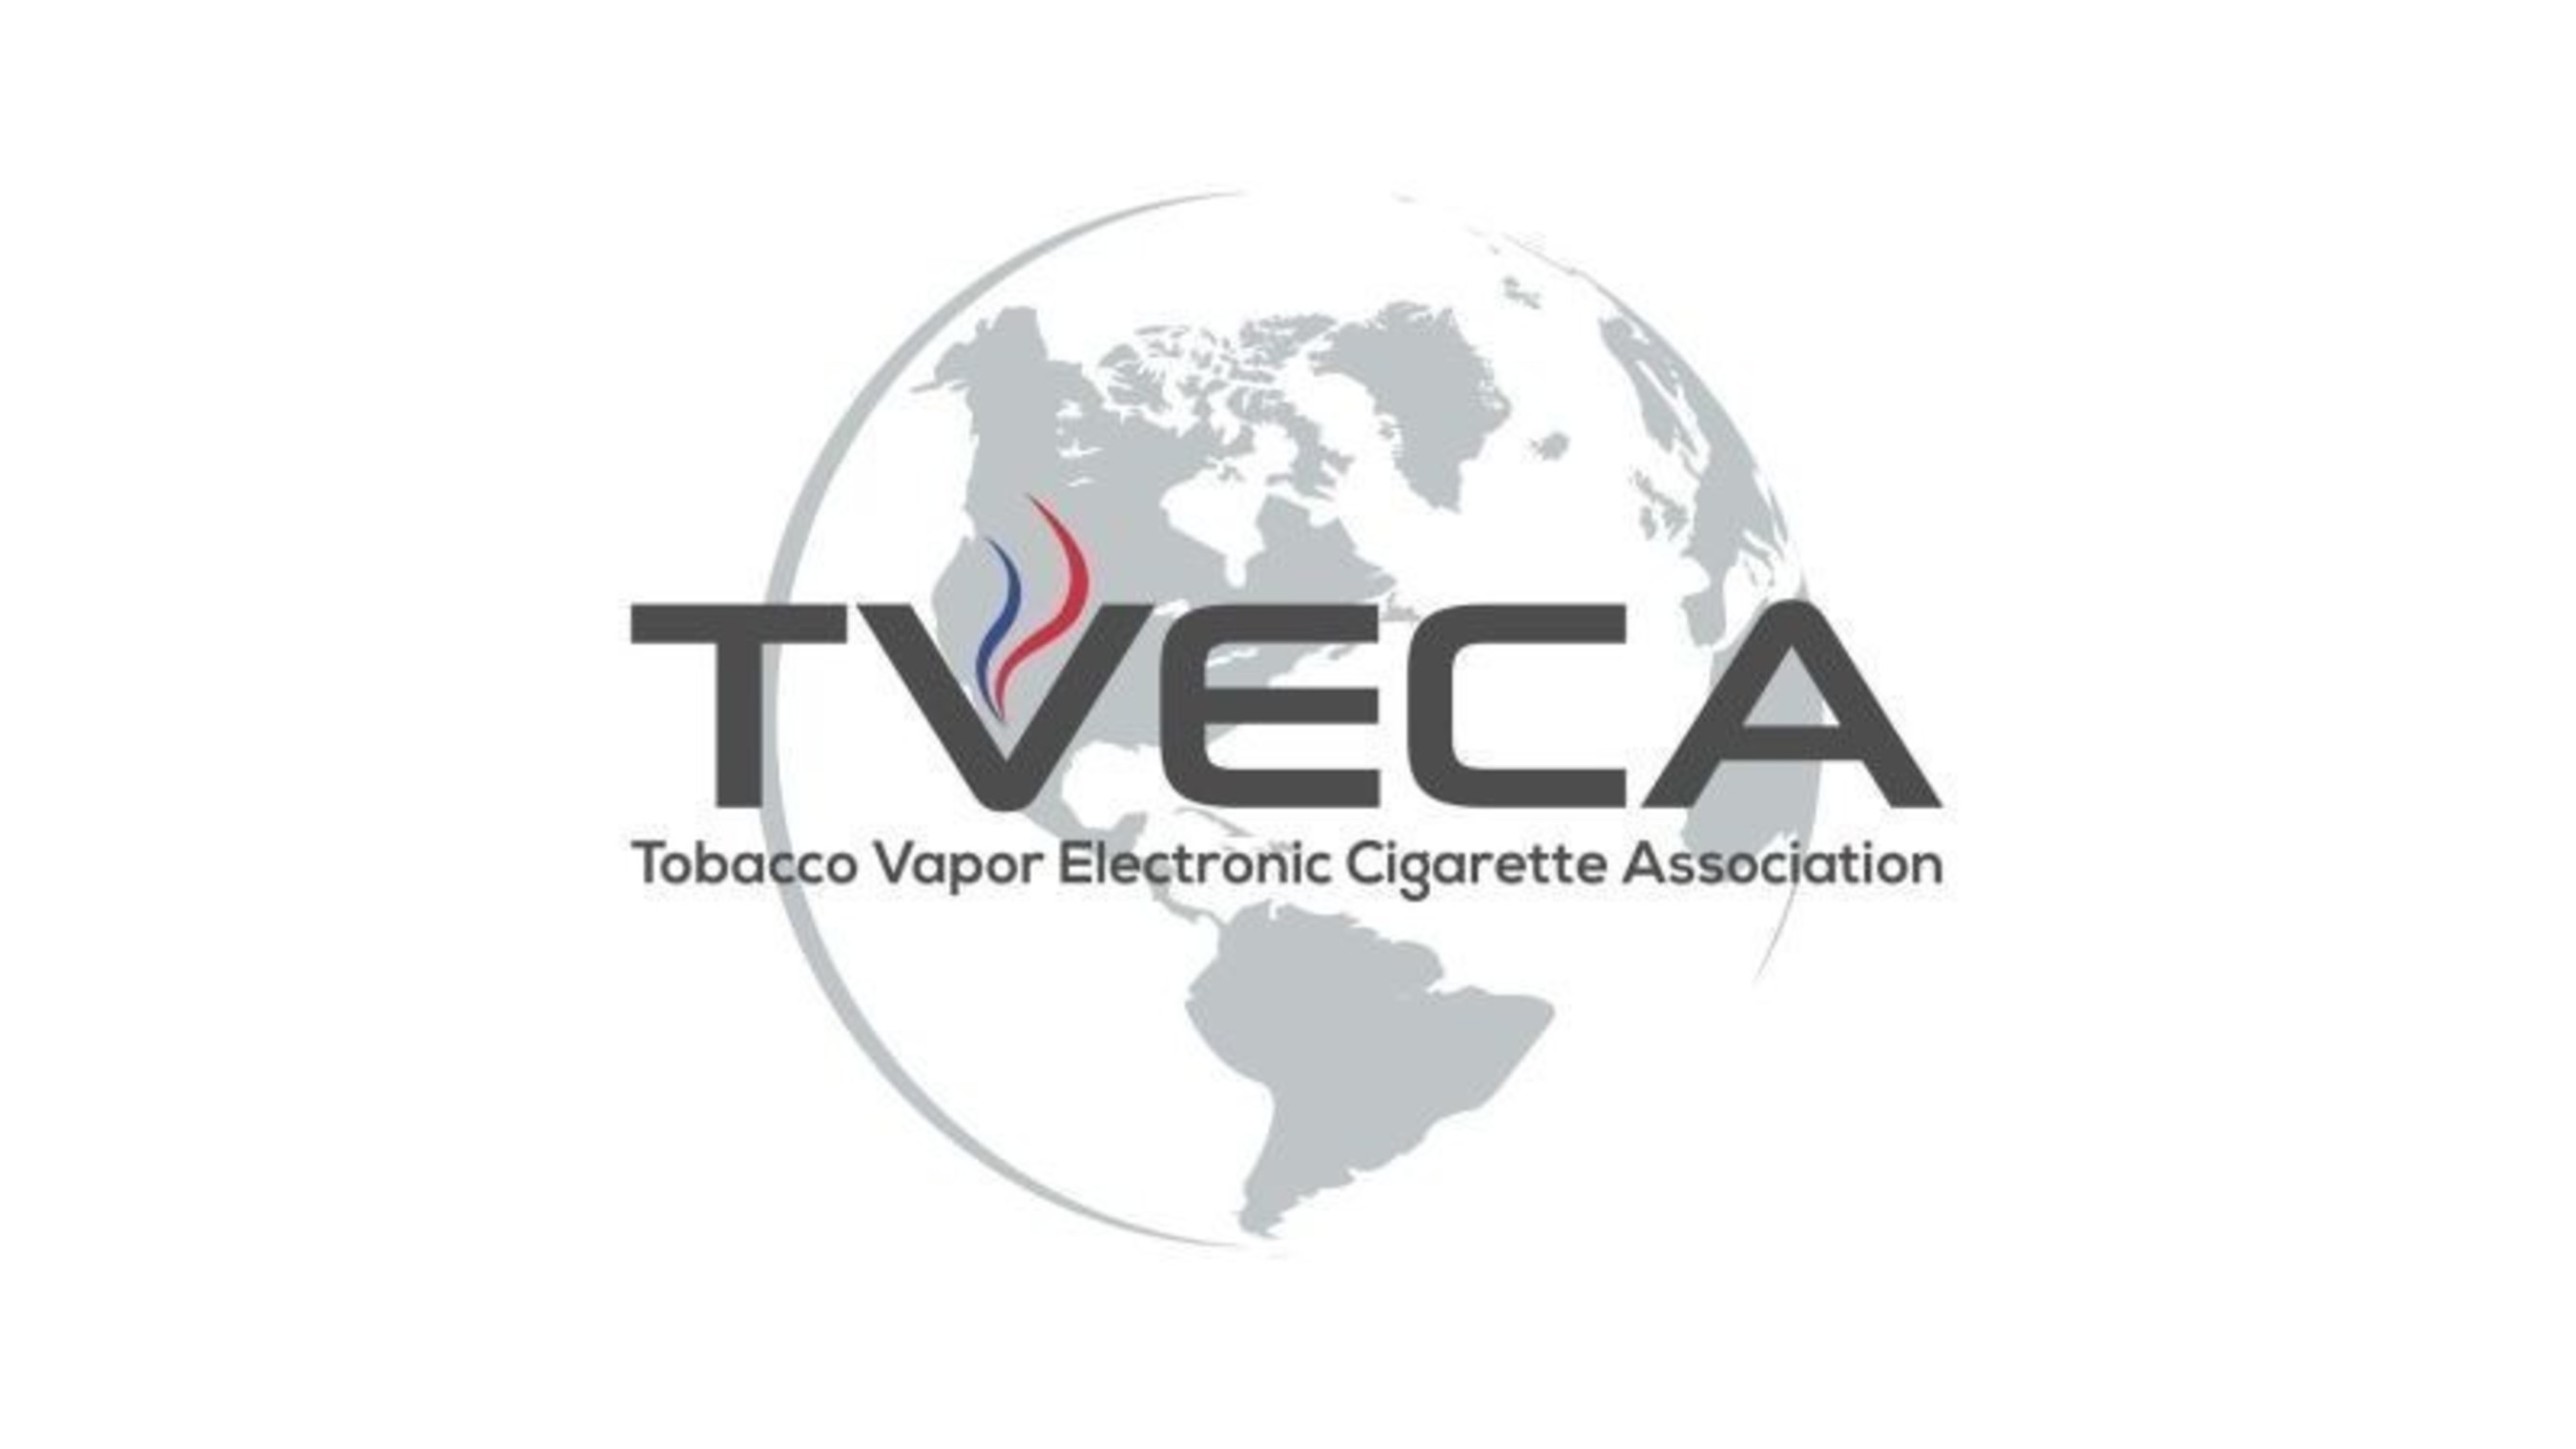 TVECA Tobacco Vapor Electronic Cigarette Association (PRNewsFoto/TVECA) (PRNewsFoto/TVECA)